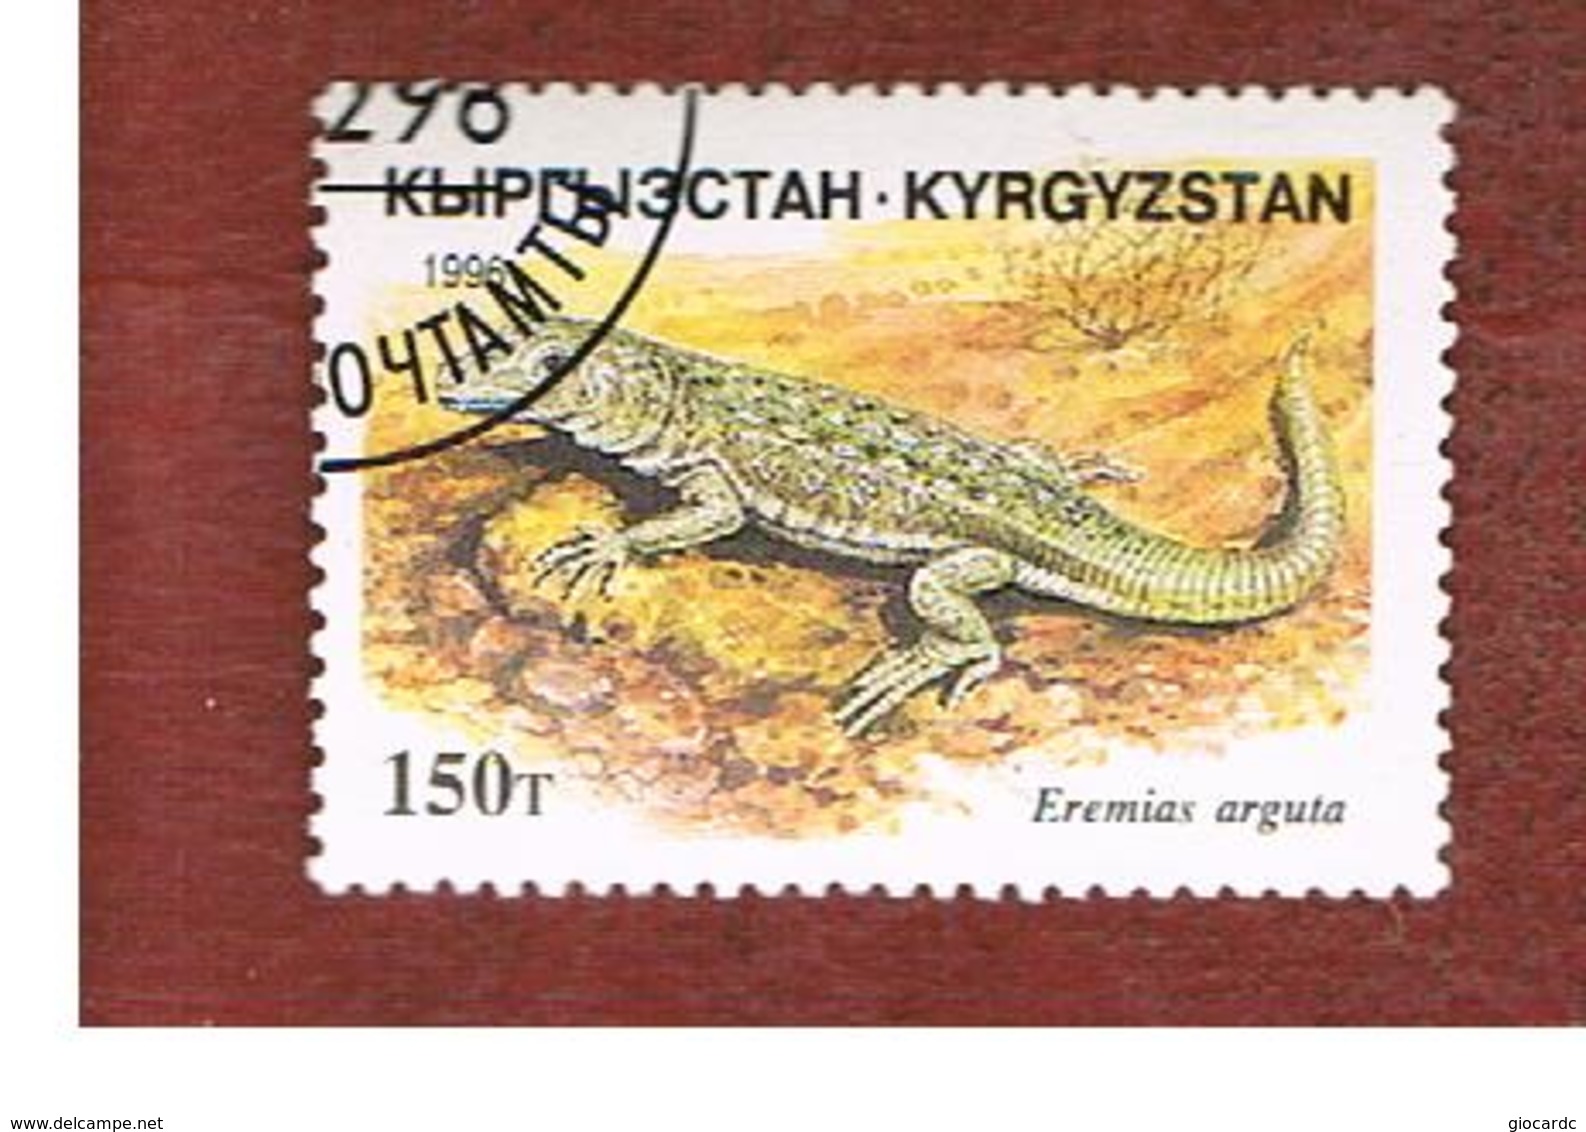 KYRGYZSTAN   - SG 111   -  1996  REPTILES: EREMIAS ARGUTA   -   USED - Kirghizstan